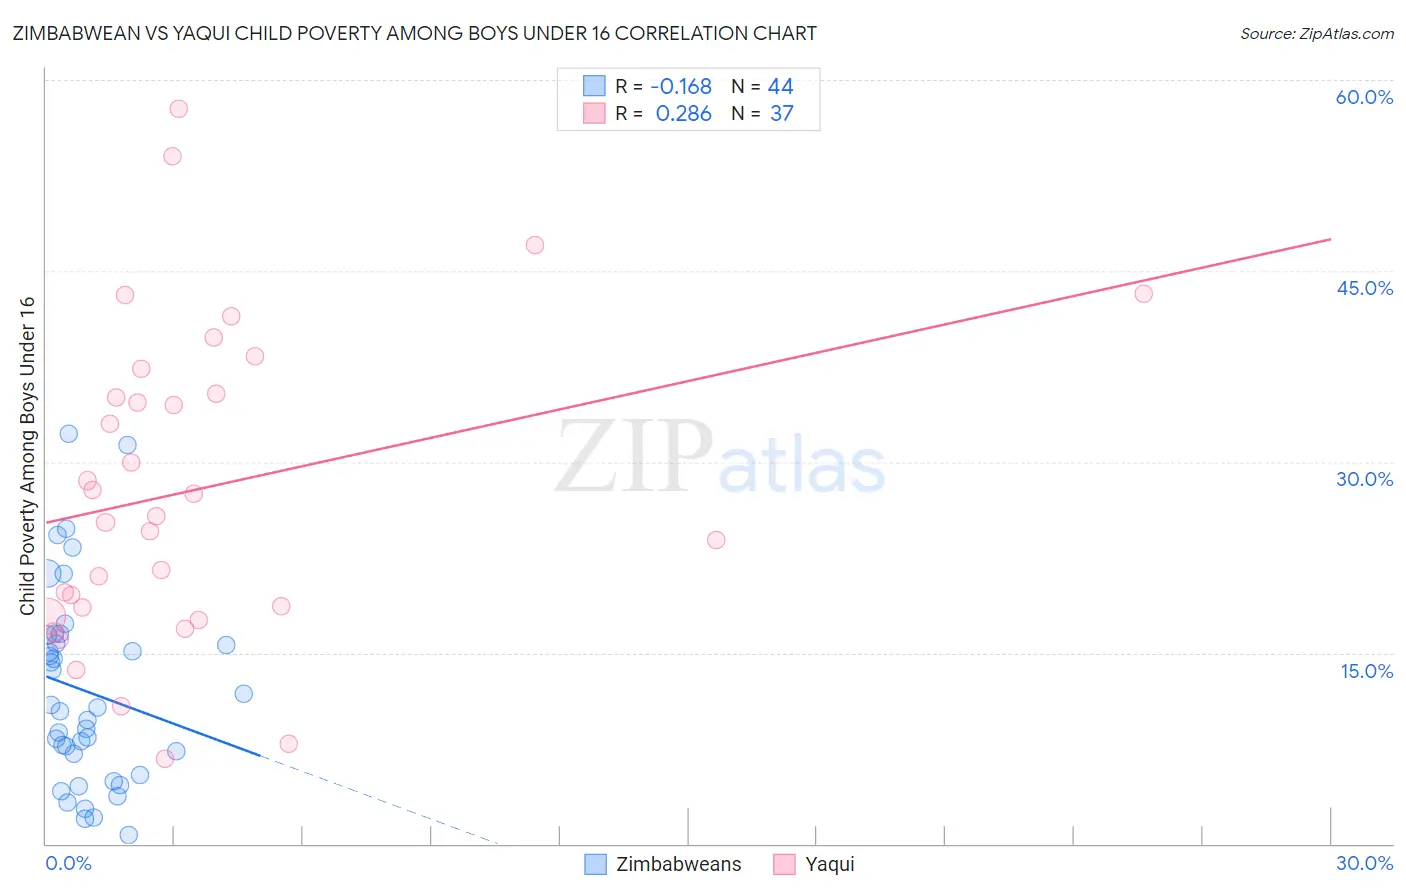 Zimbabwean vs Yaqui Child Poverty Among Boys Under 16